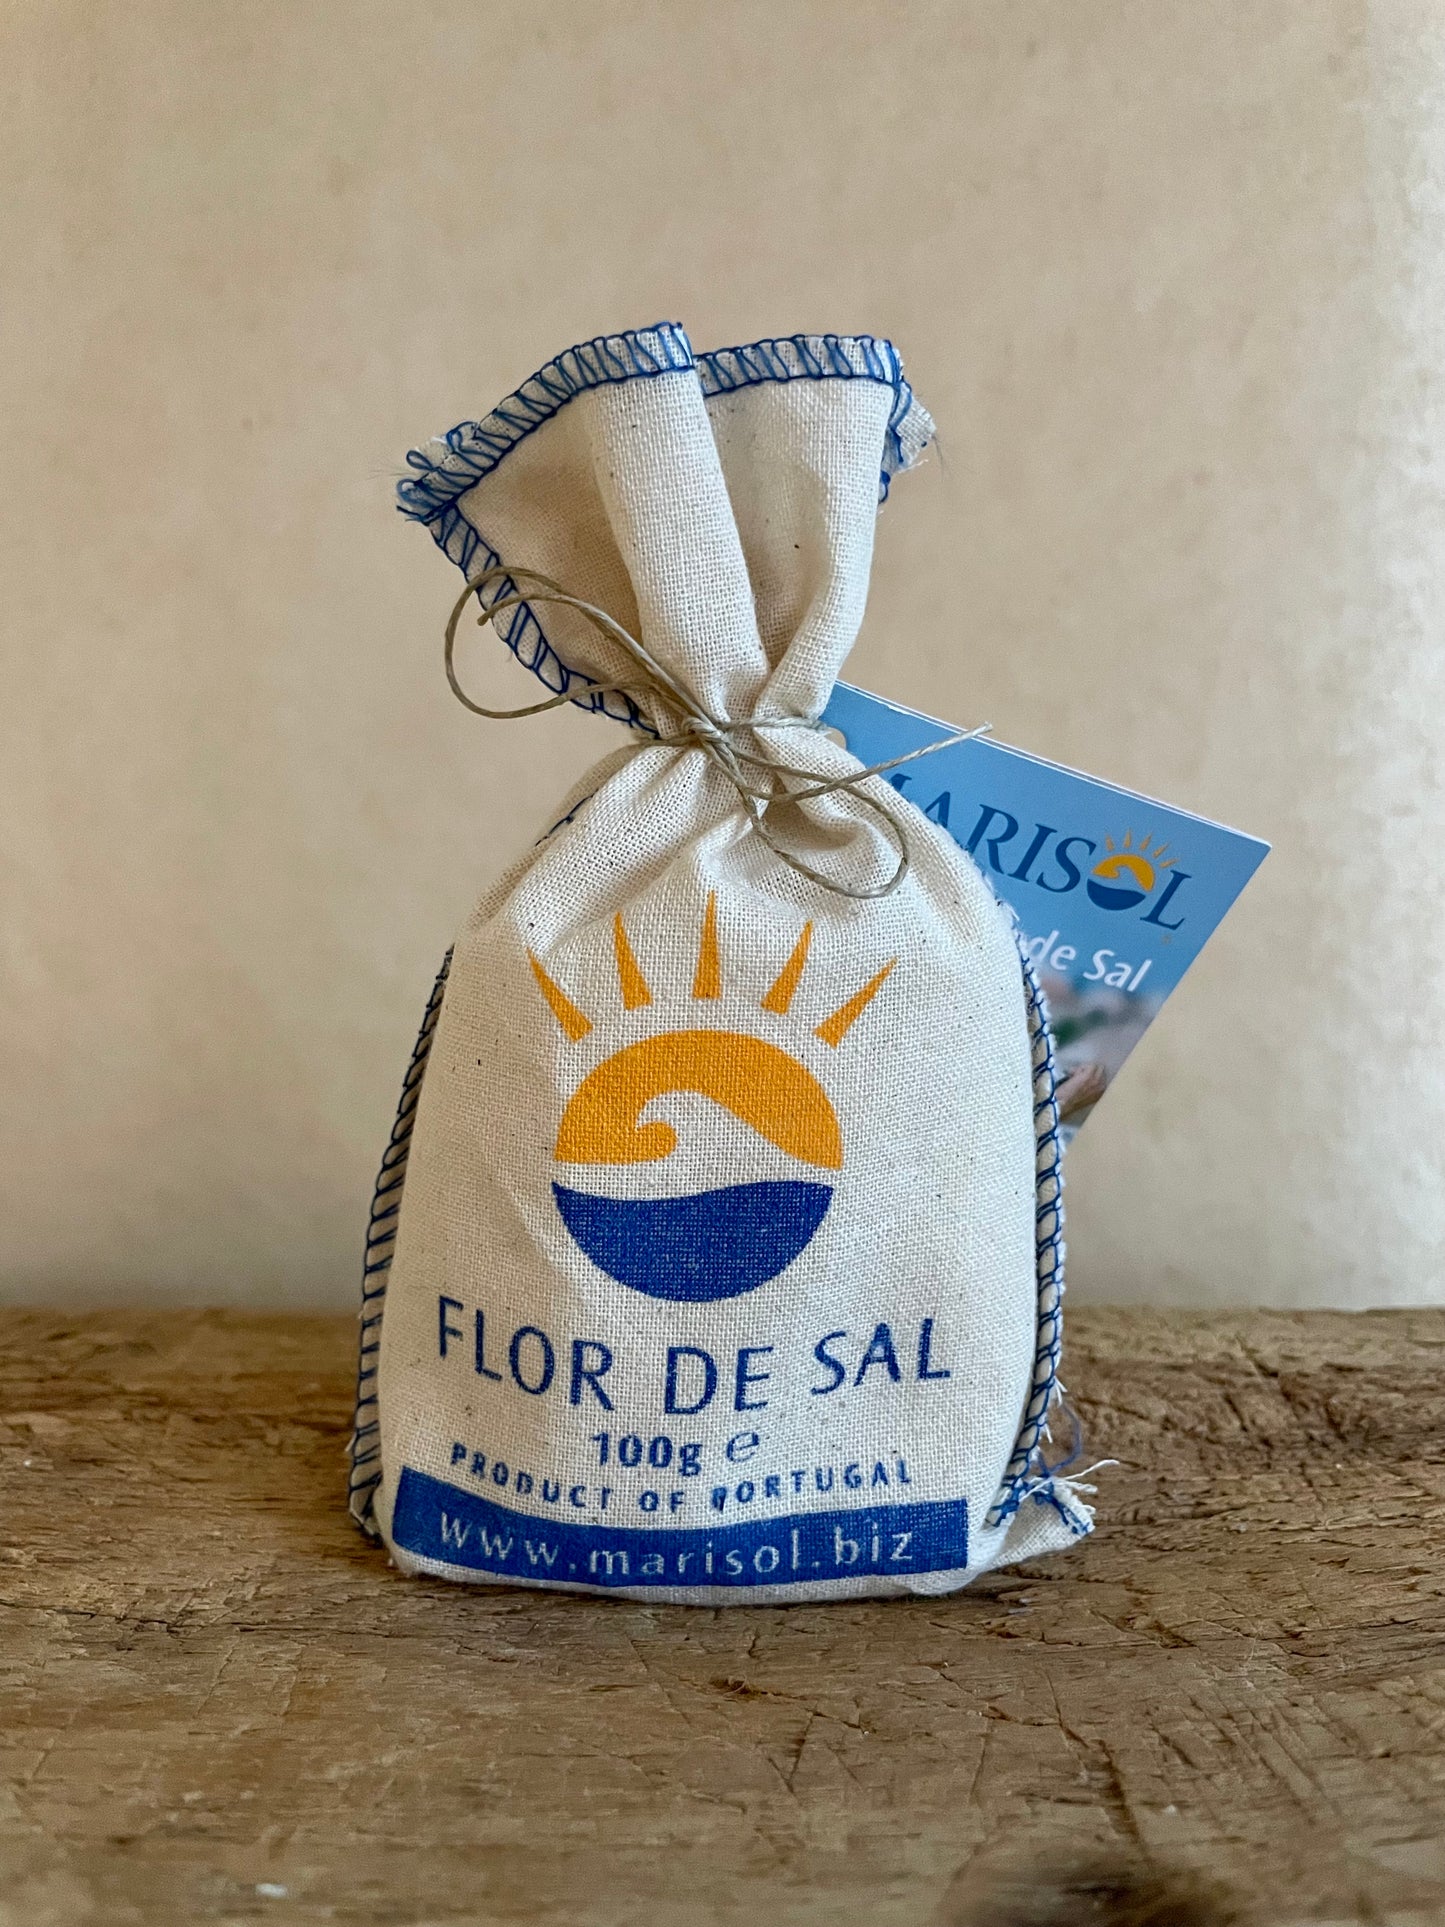 Saltblommans portugisiska saltpaket